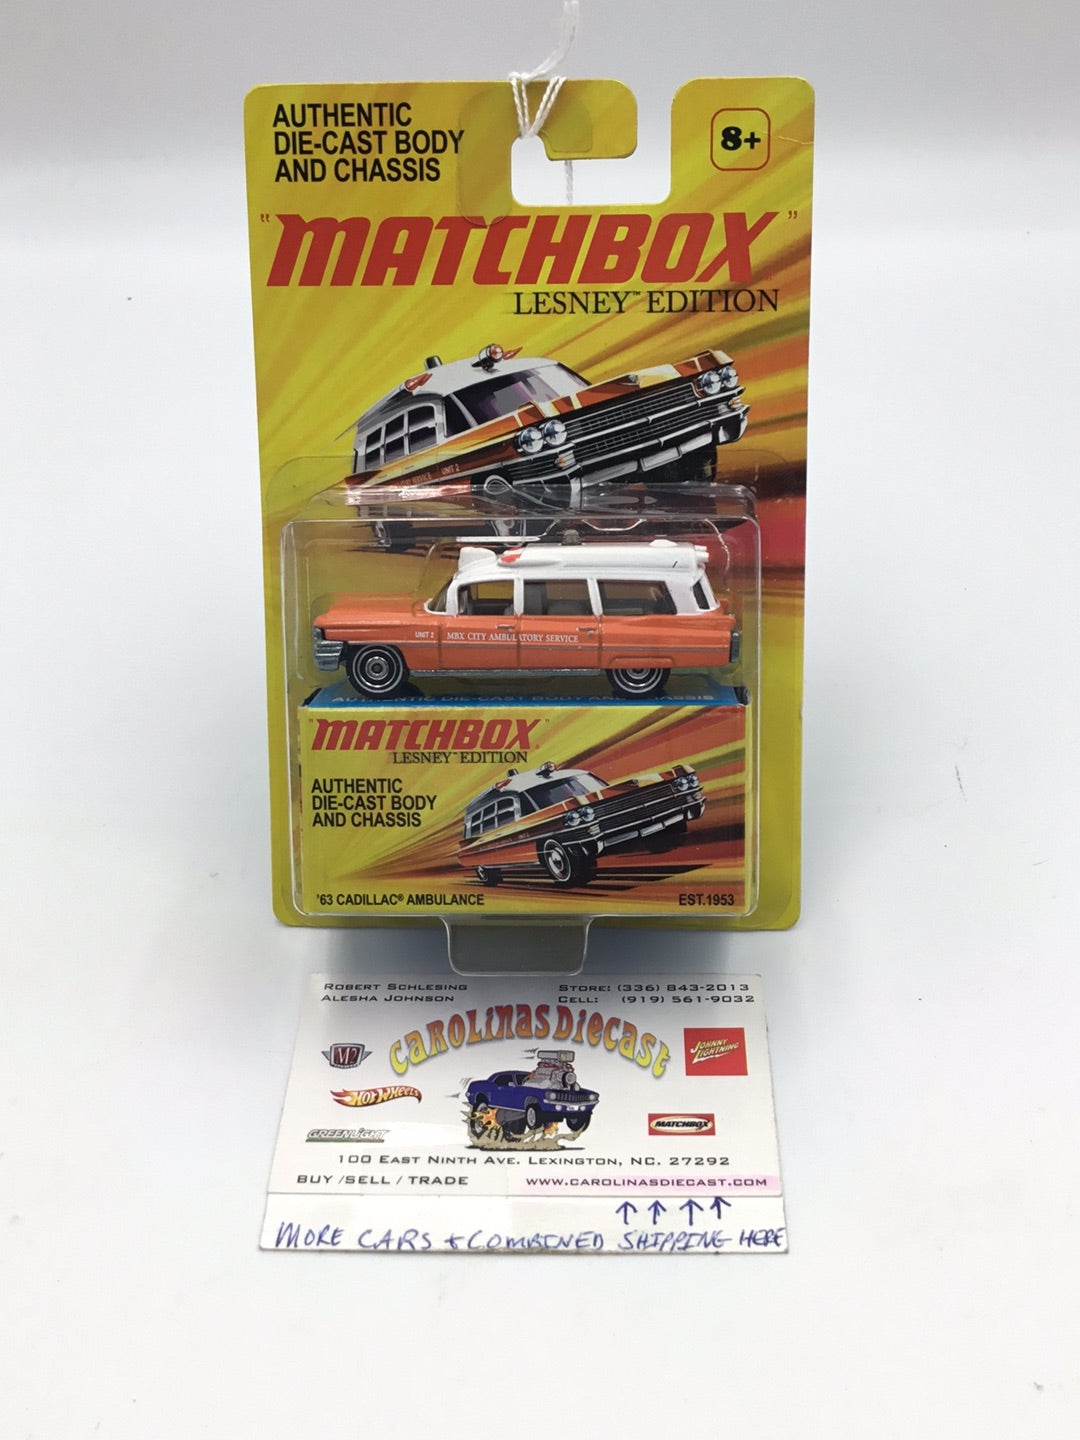 Matchbox Lesley Edition 63 Cadillac Ambulance VHTF